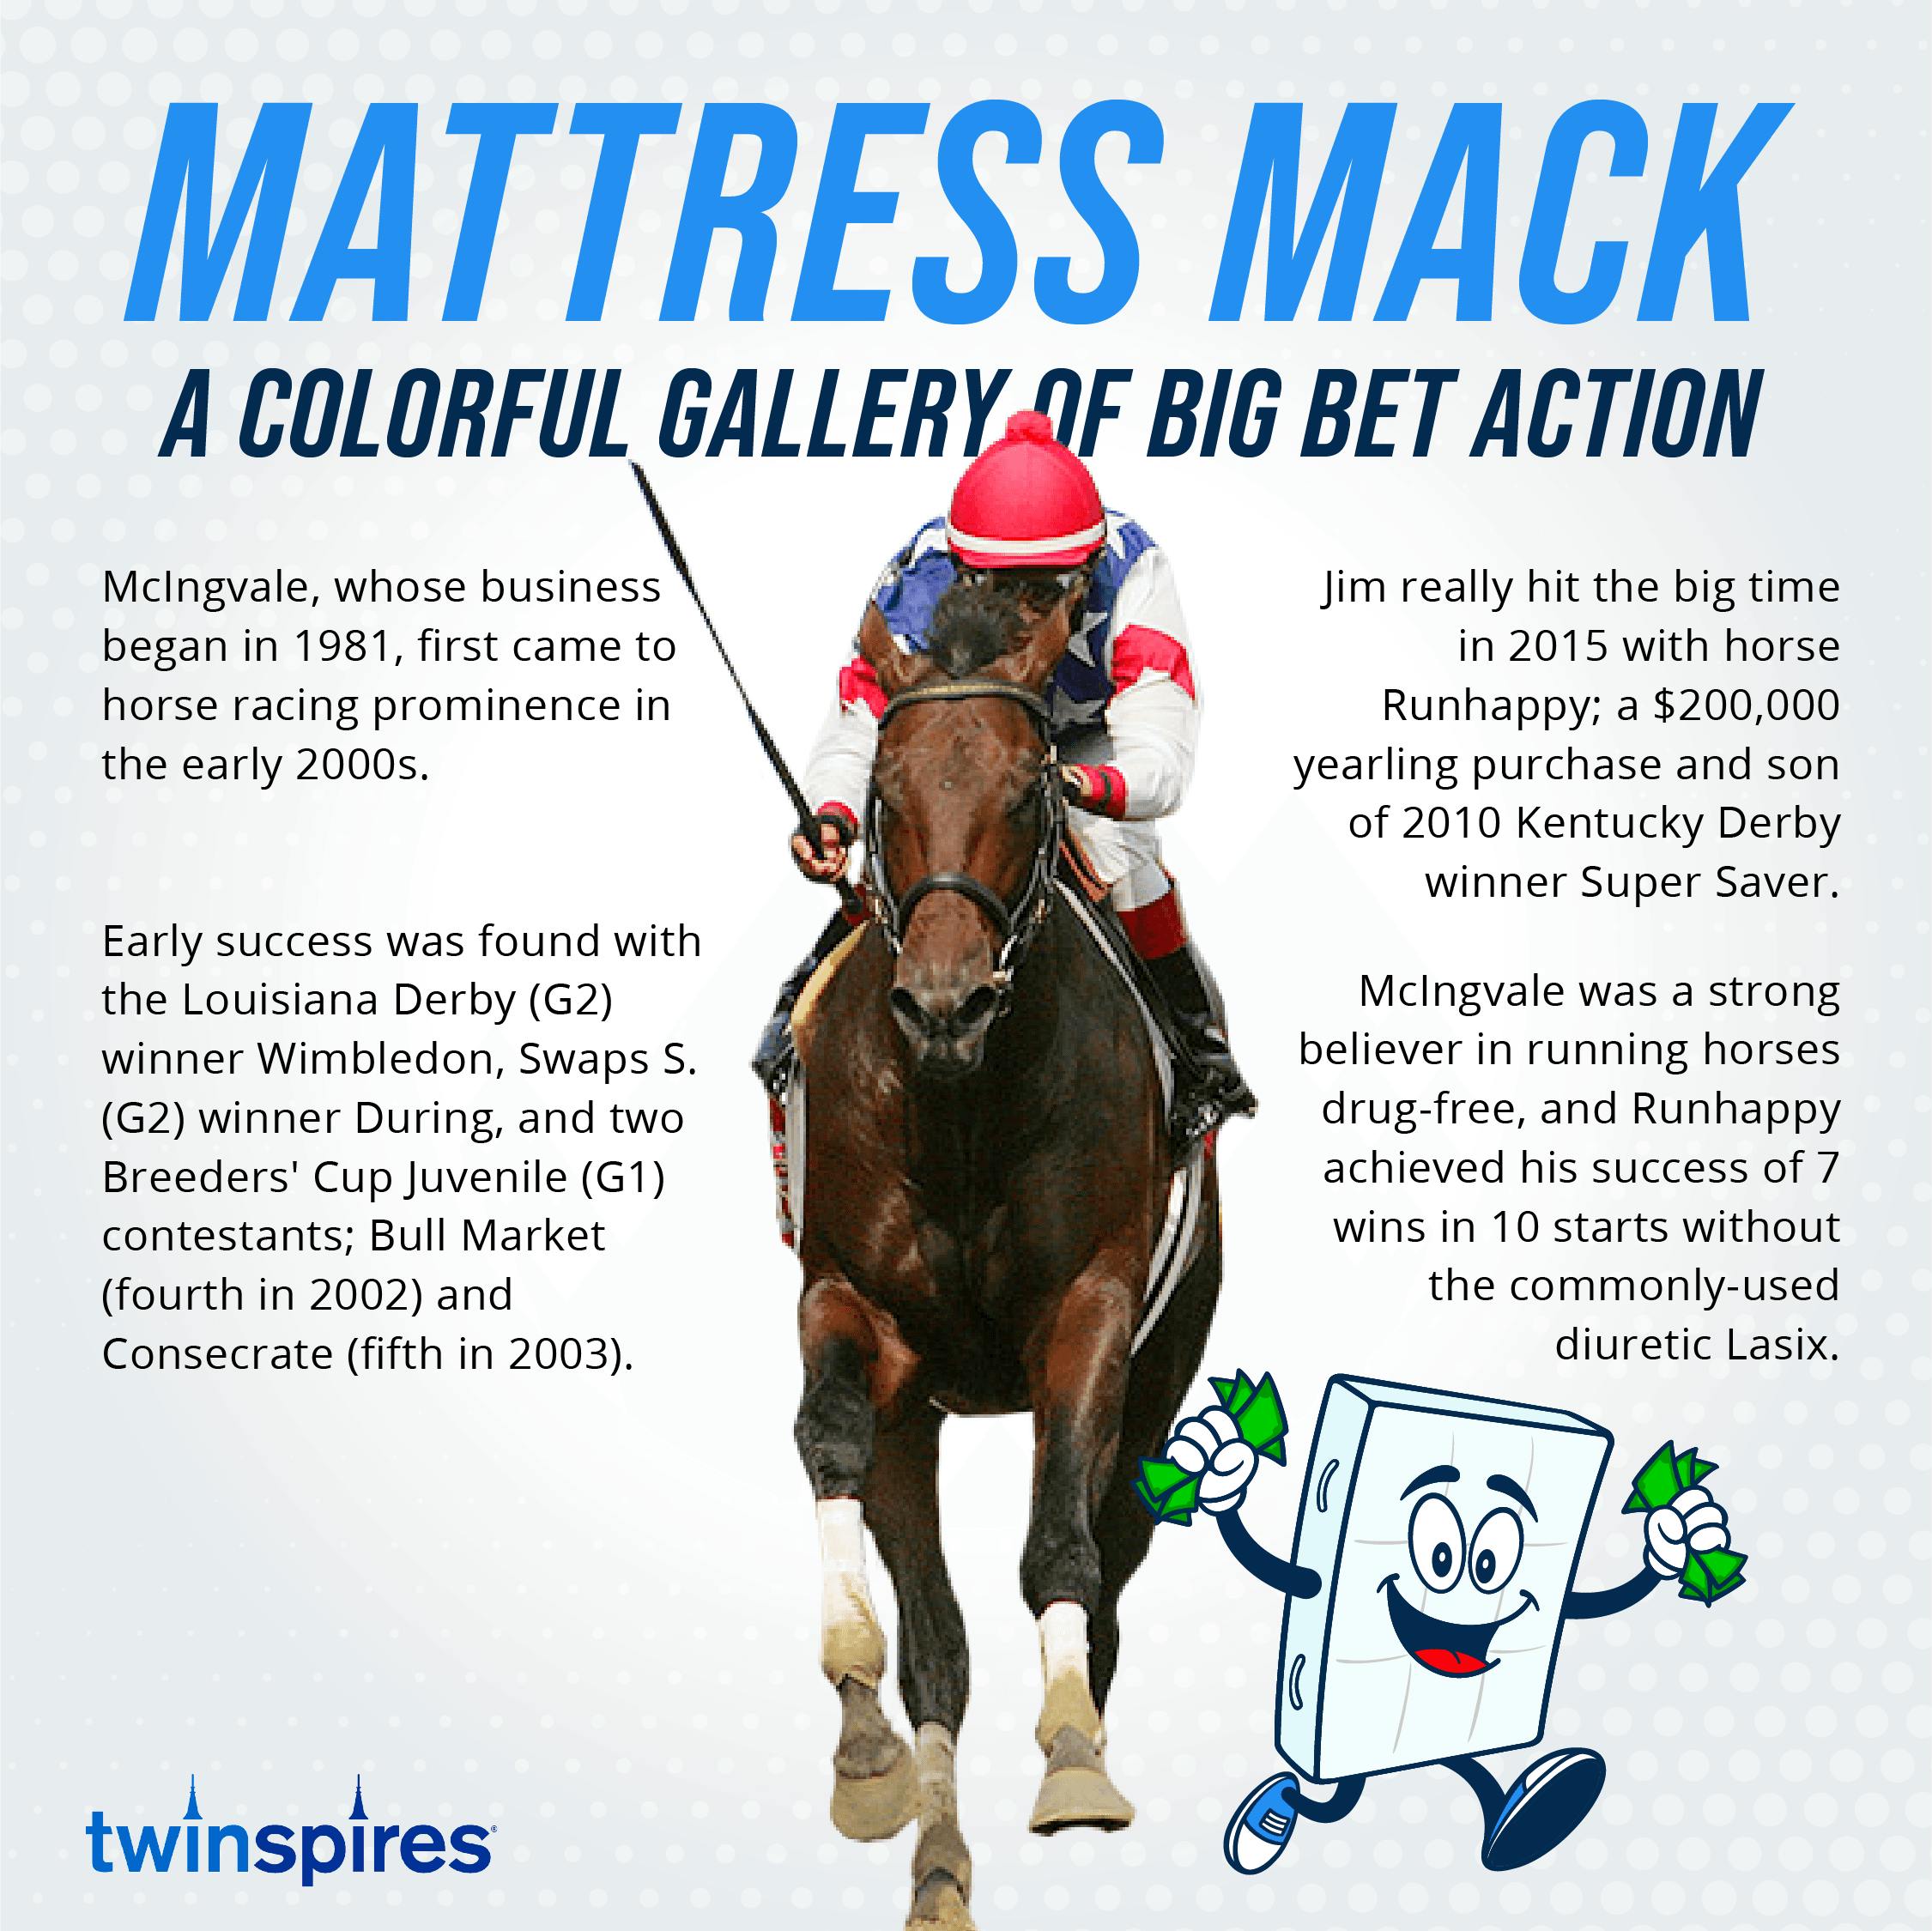 Mattress Mack made another massive sports bet, it's already